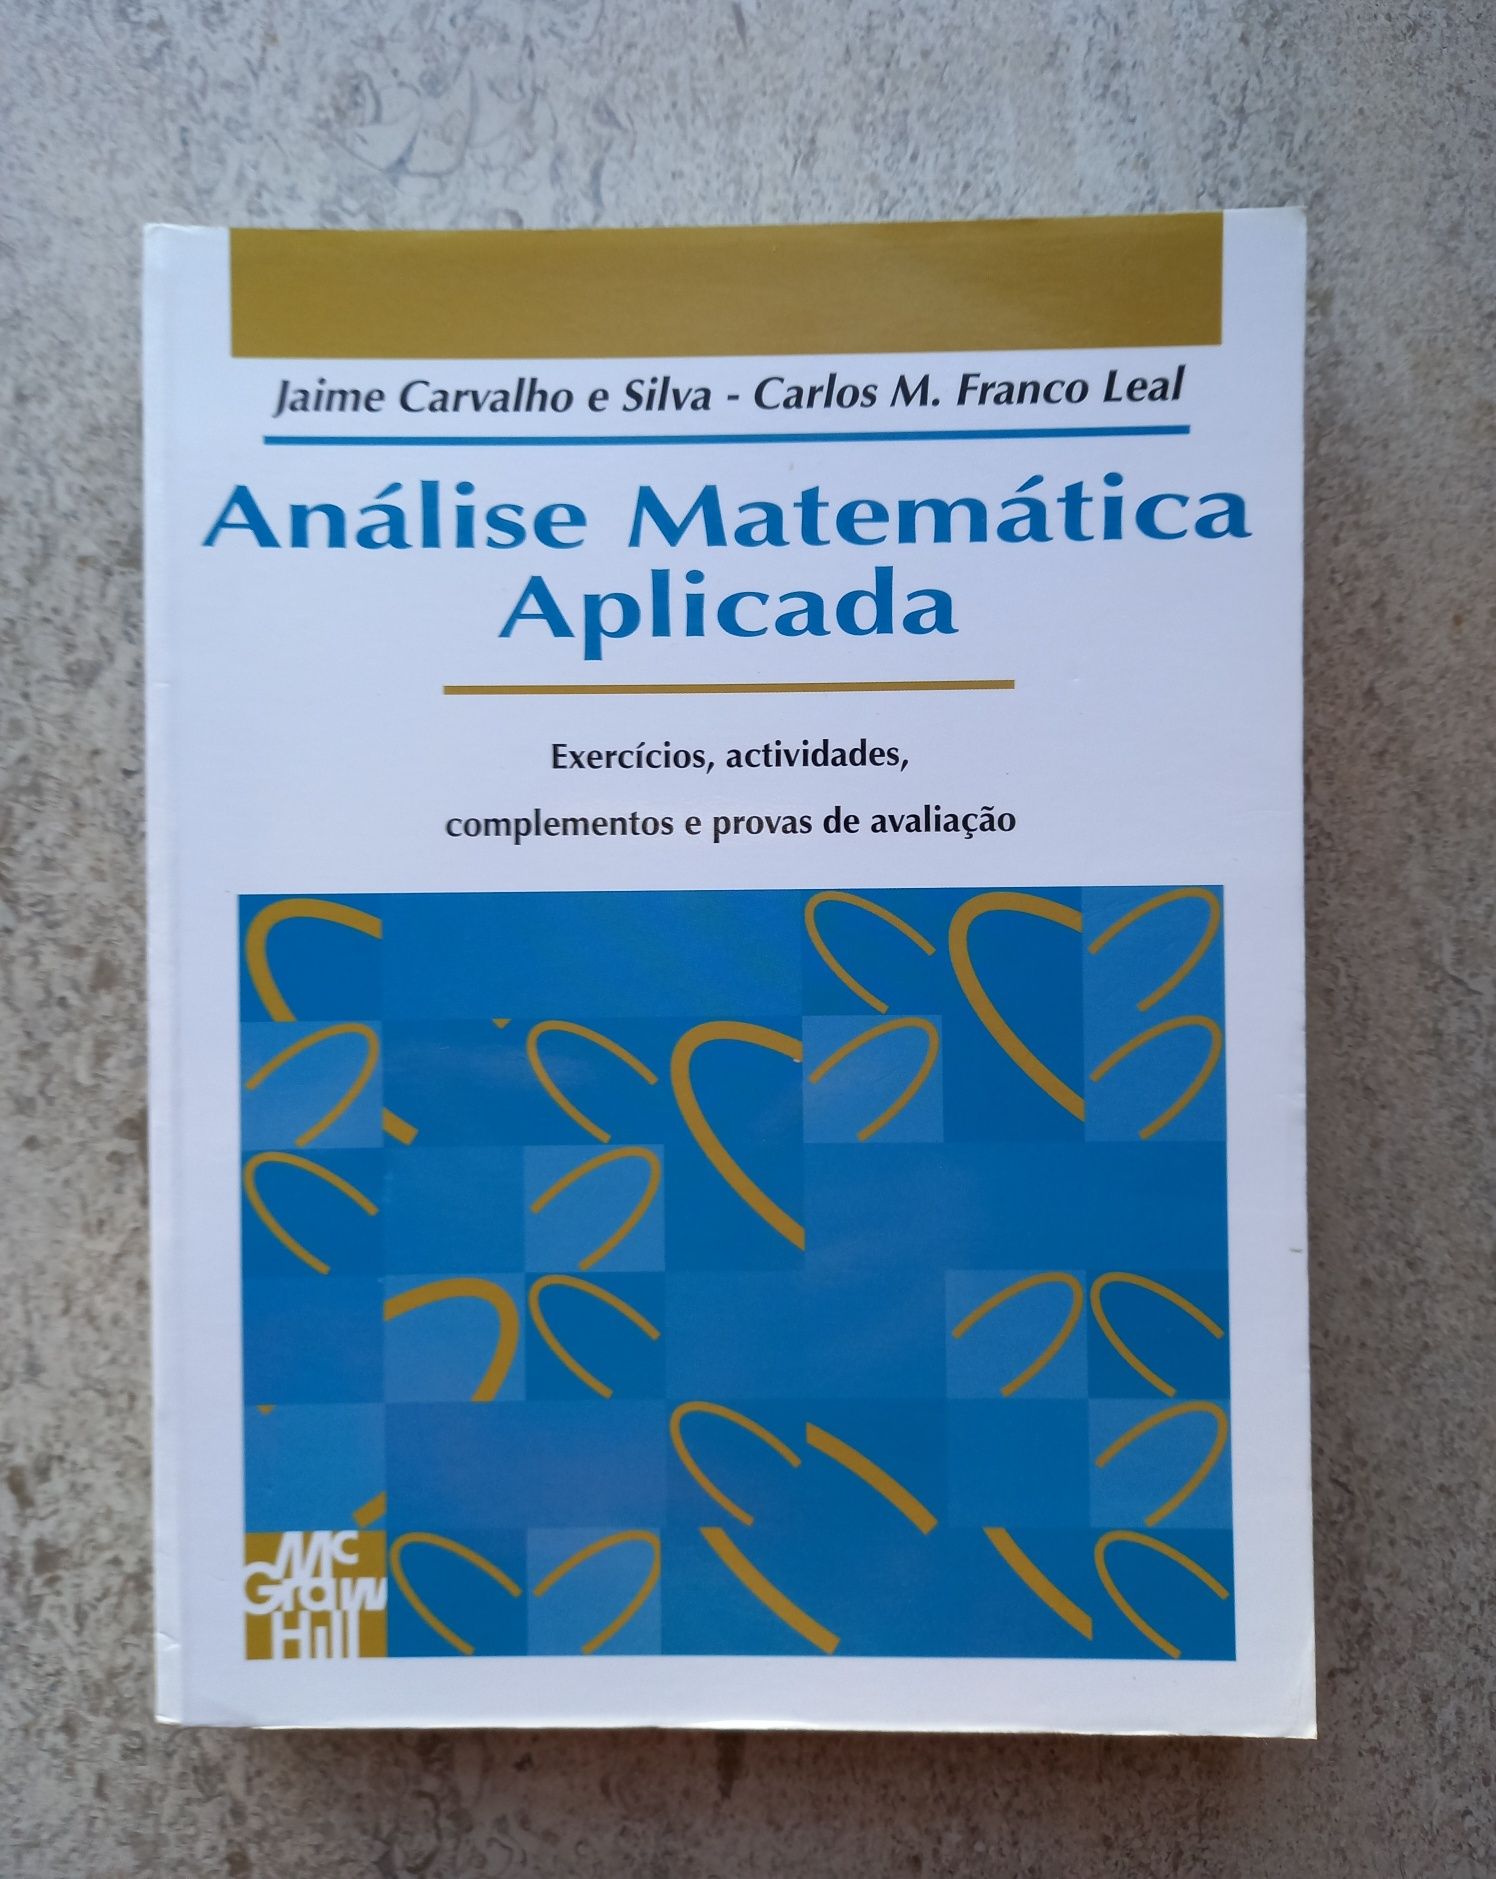 Análise Matemática Aplicada, Jaime Carvalho e Silva, Carlos M. F. Leal